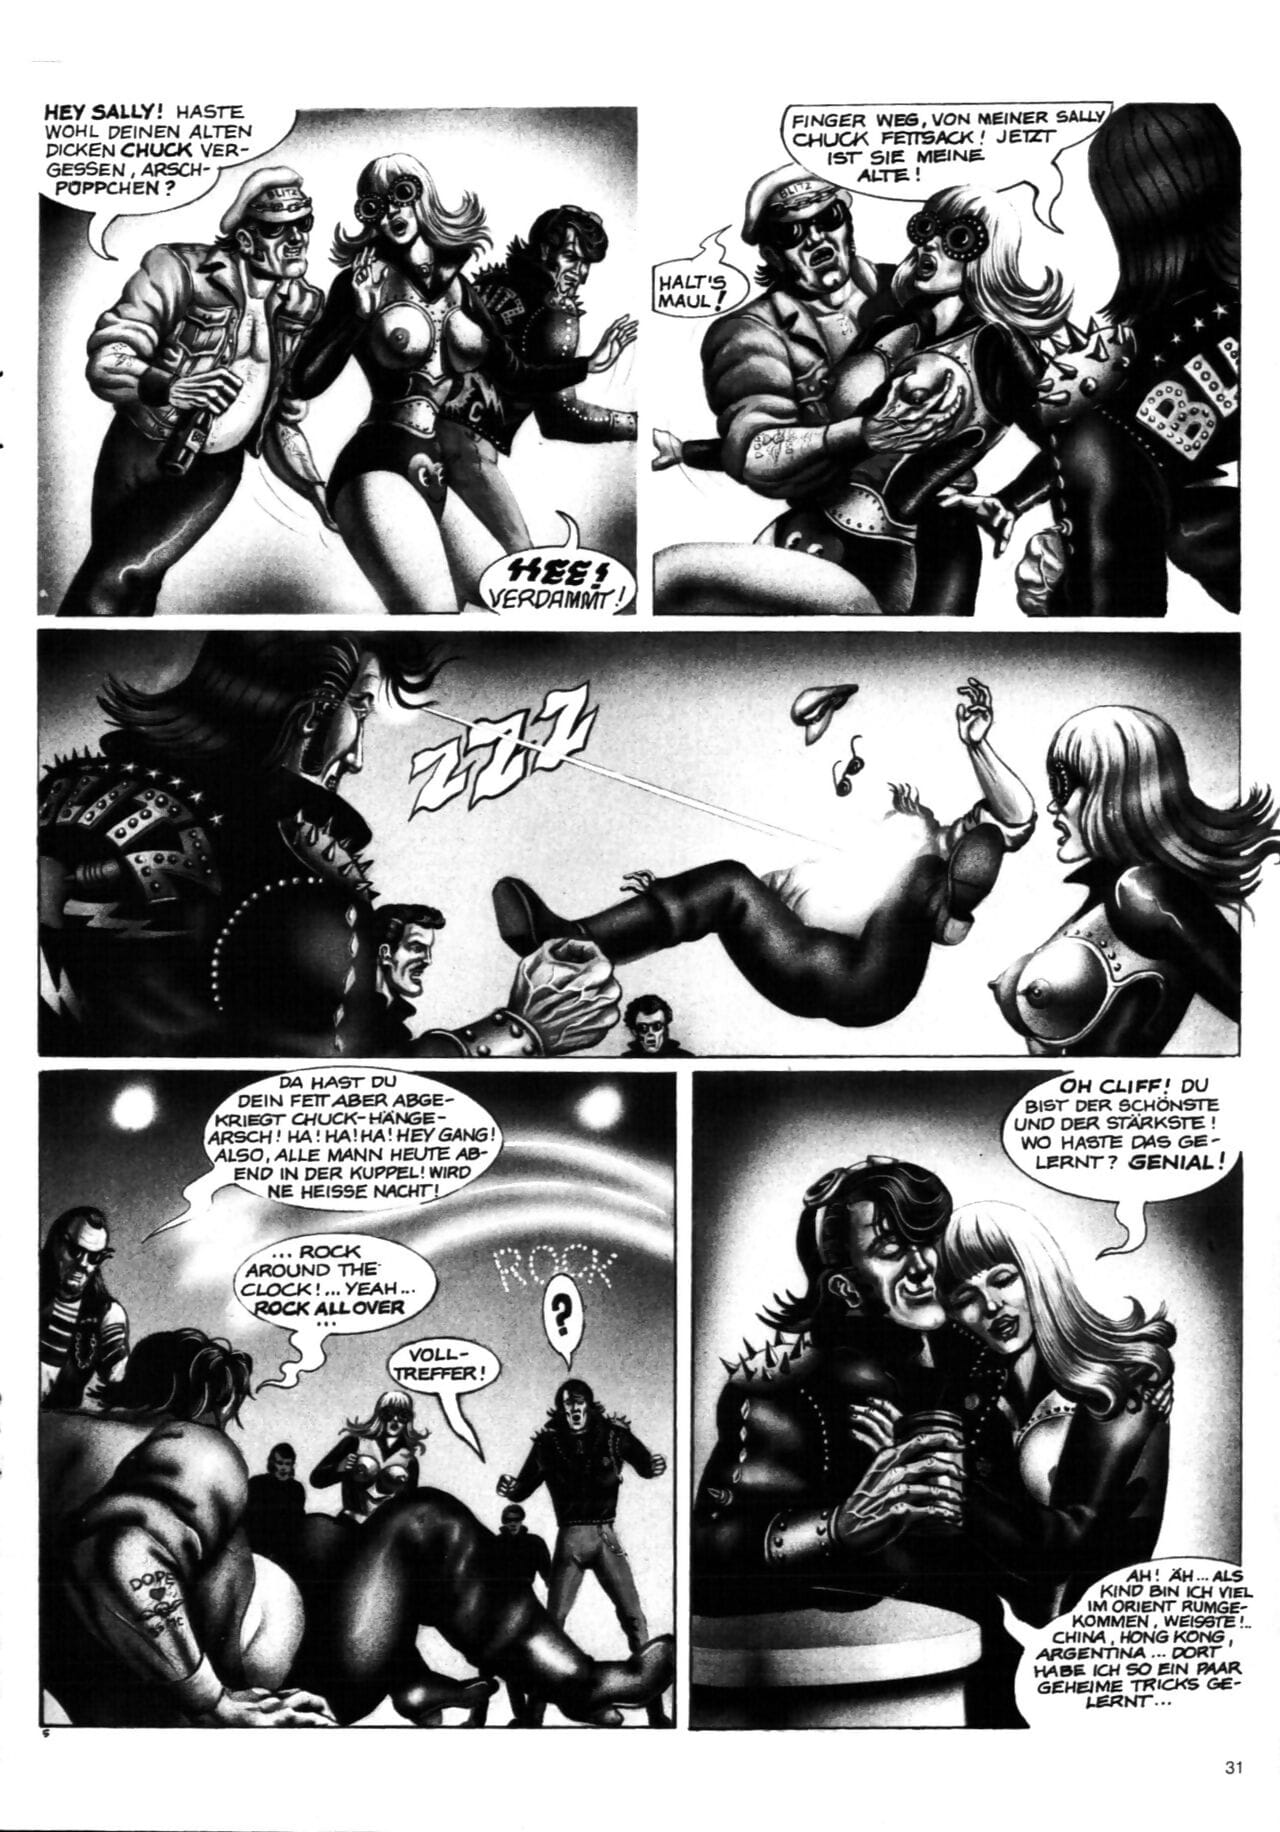 schwermetall #010 parte 2 page 1